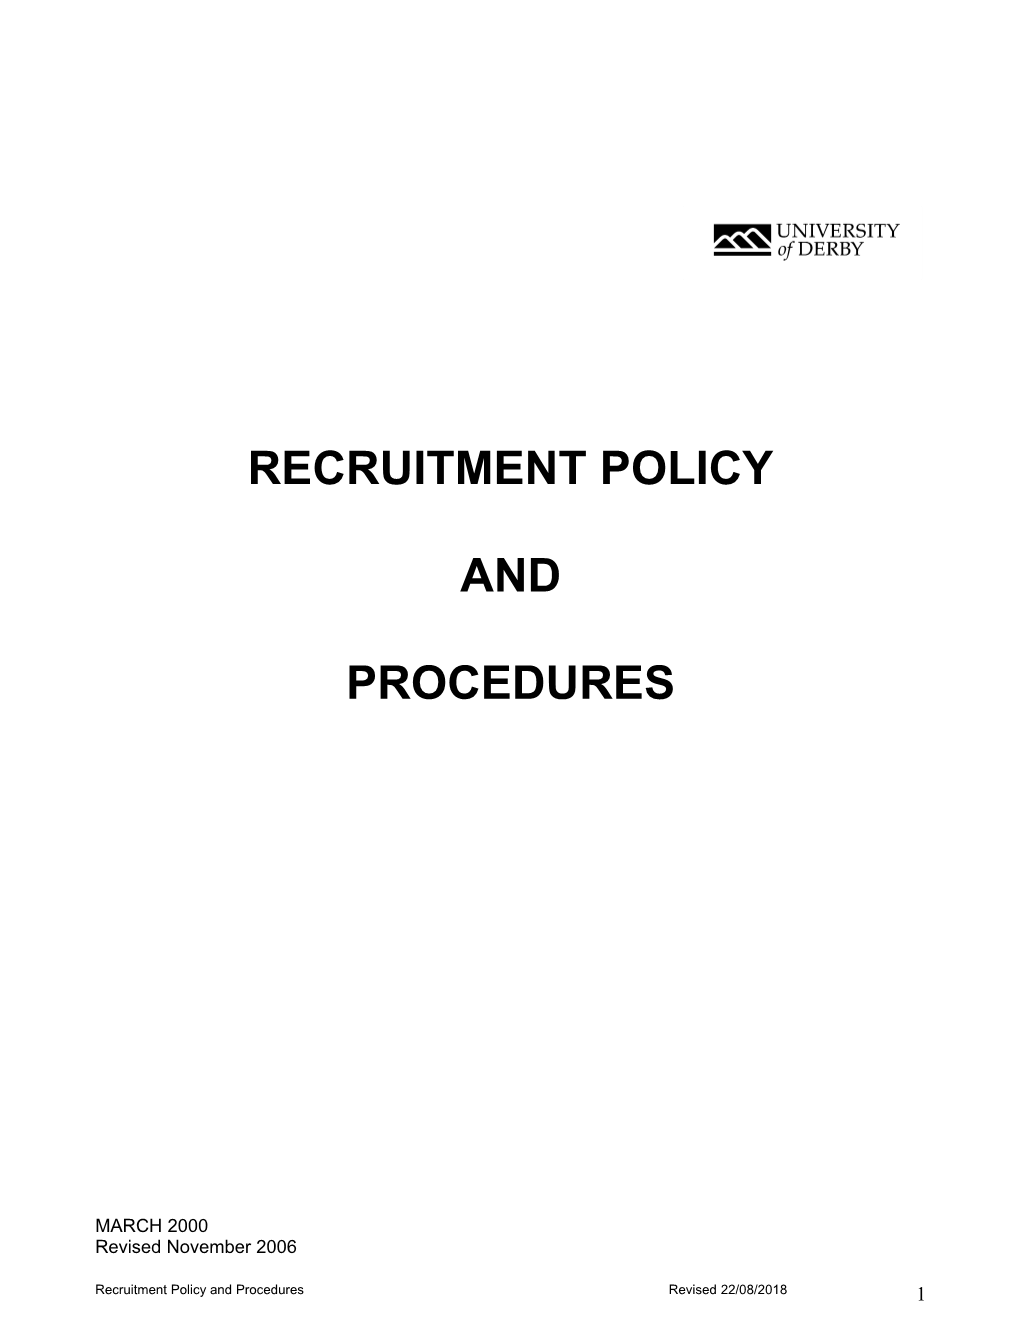 Recruitment Policy & Procedures